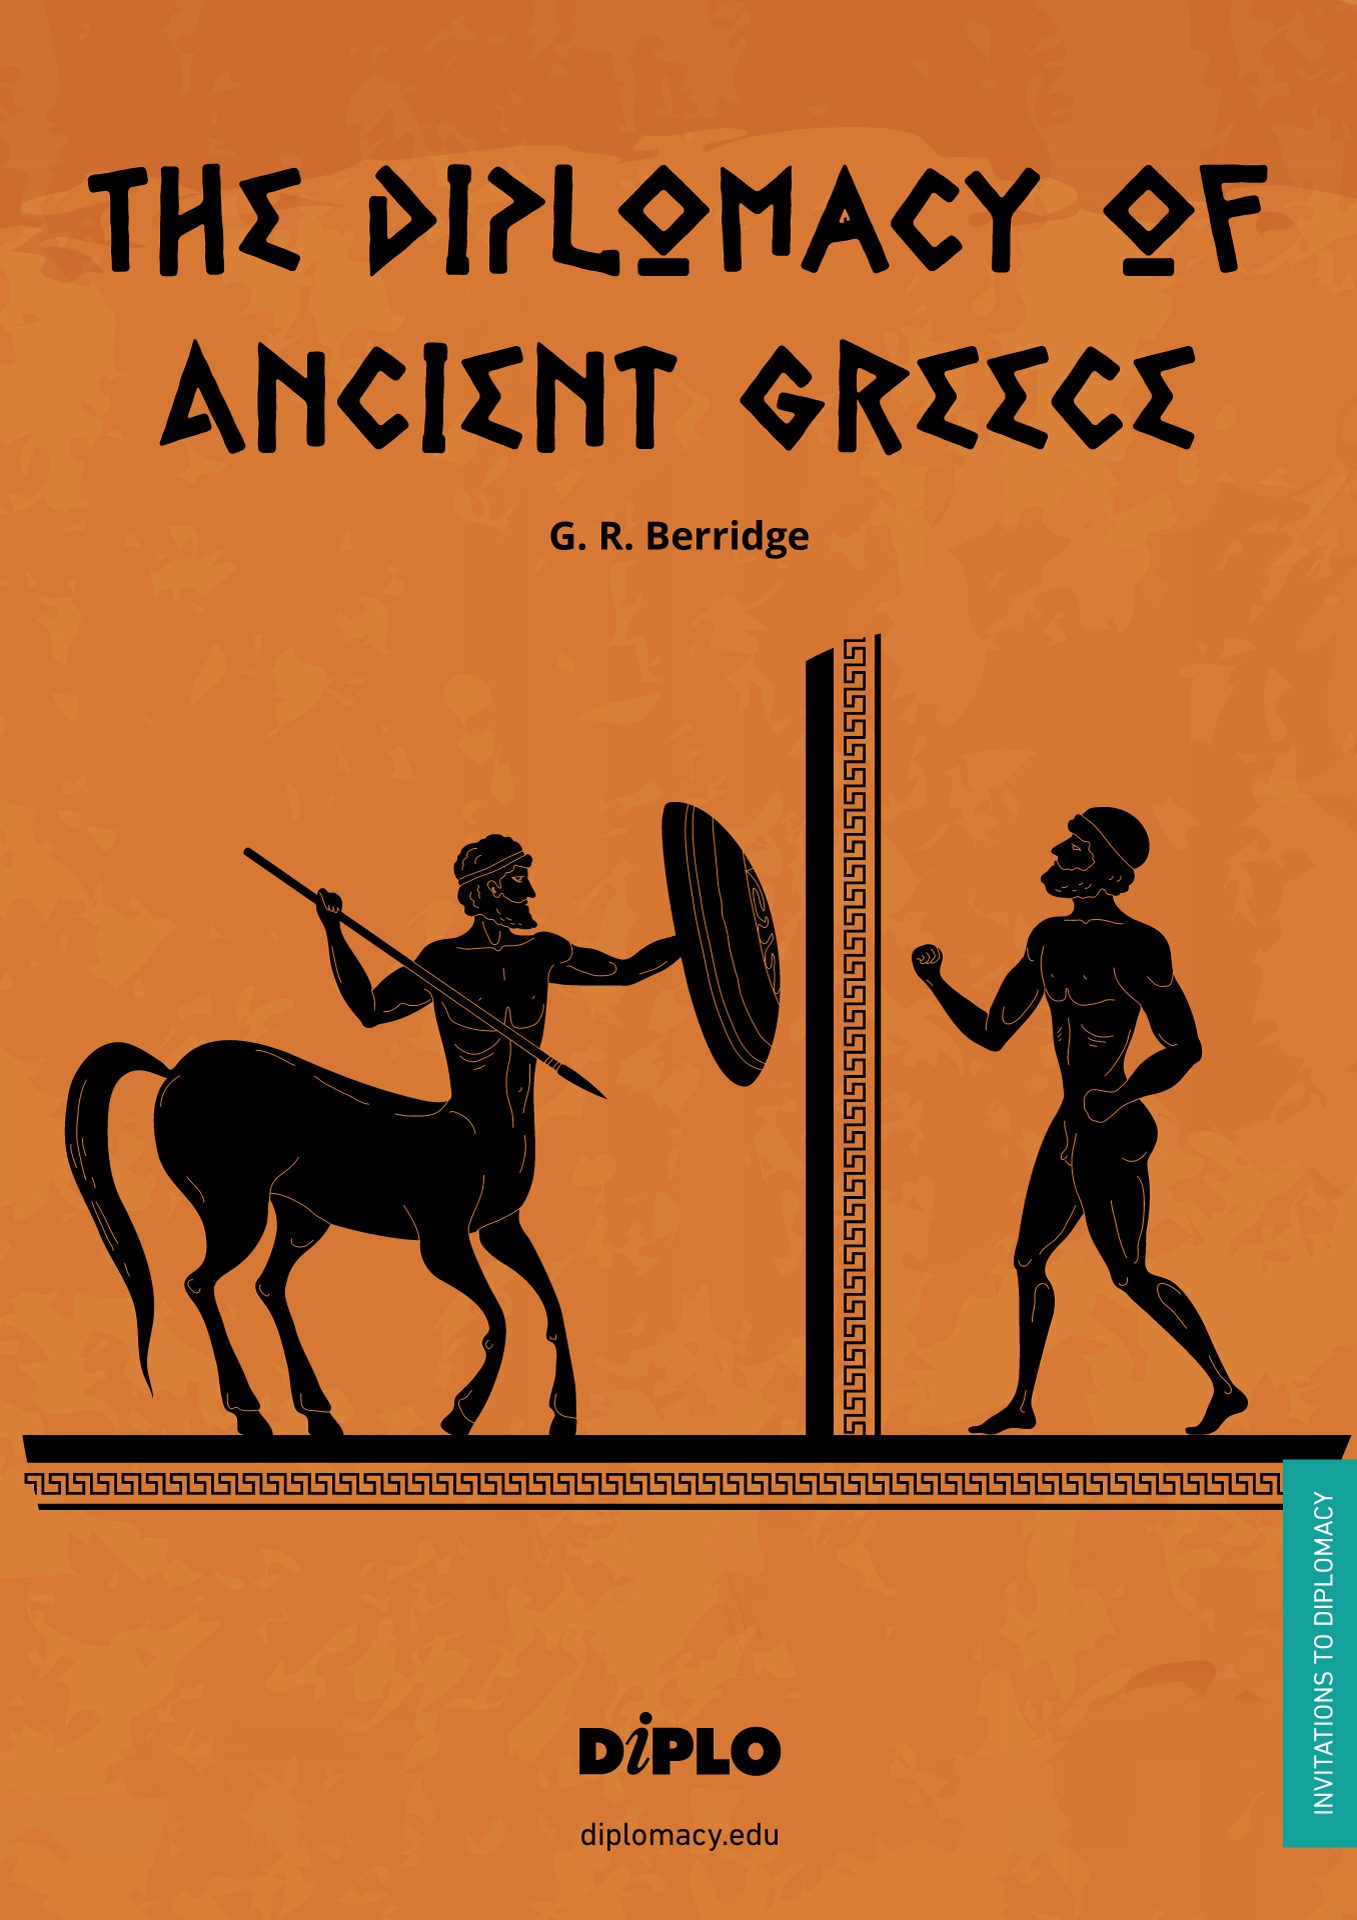 Diplo-publication_Diplomacy-and-Ancient-Greece-G.R.Berridge_FINAL.jpg